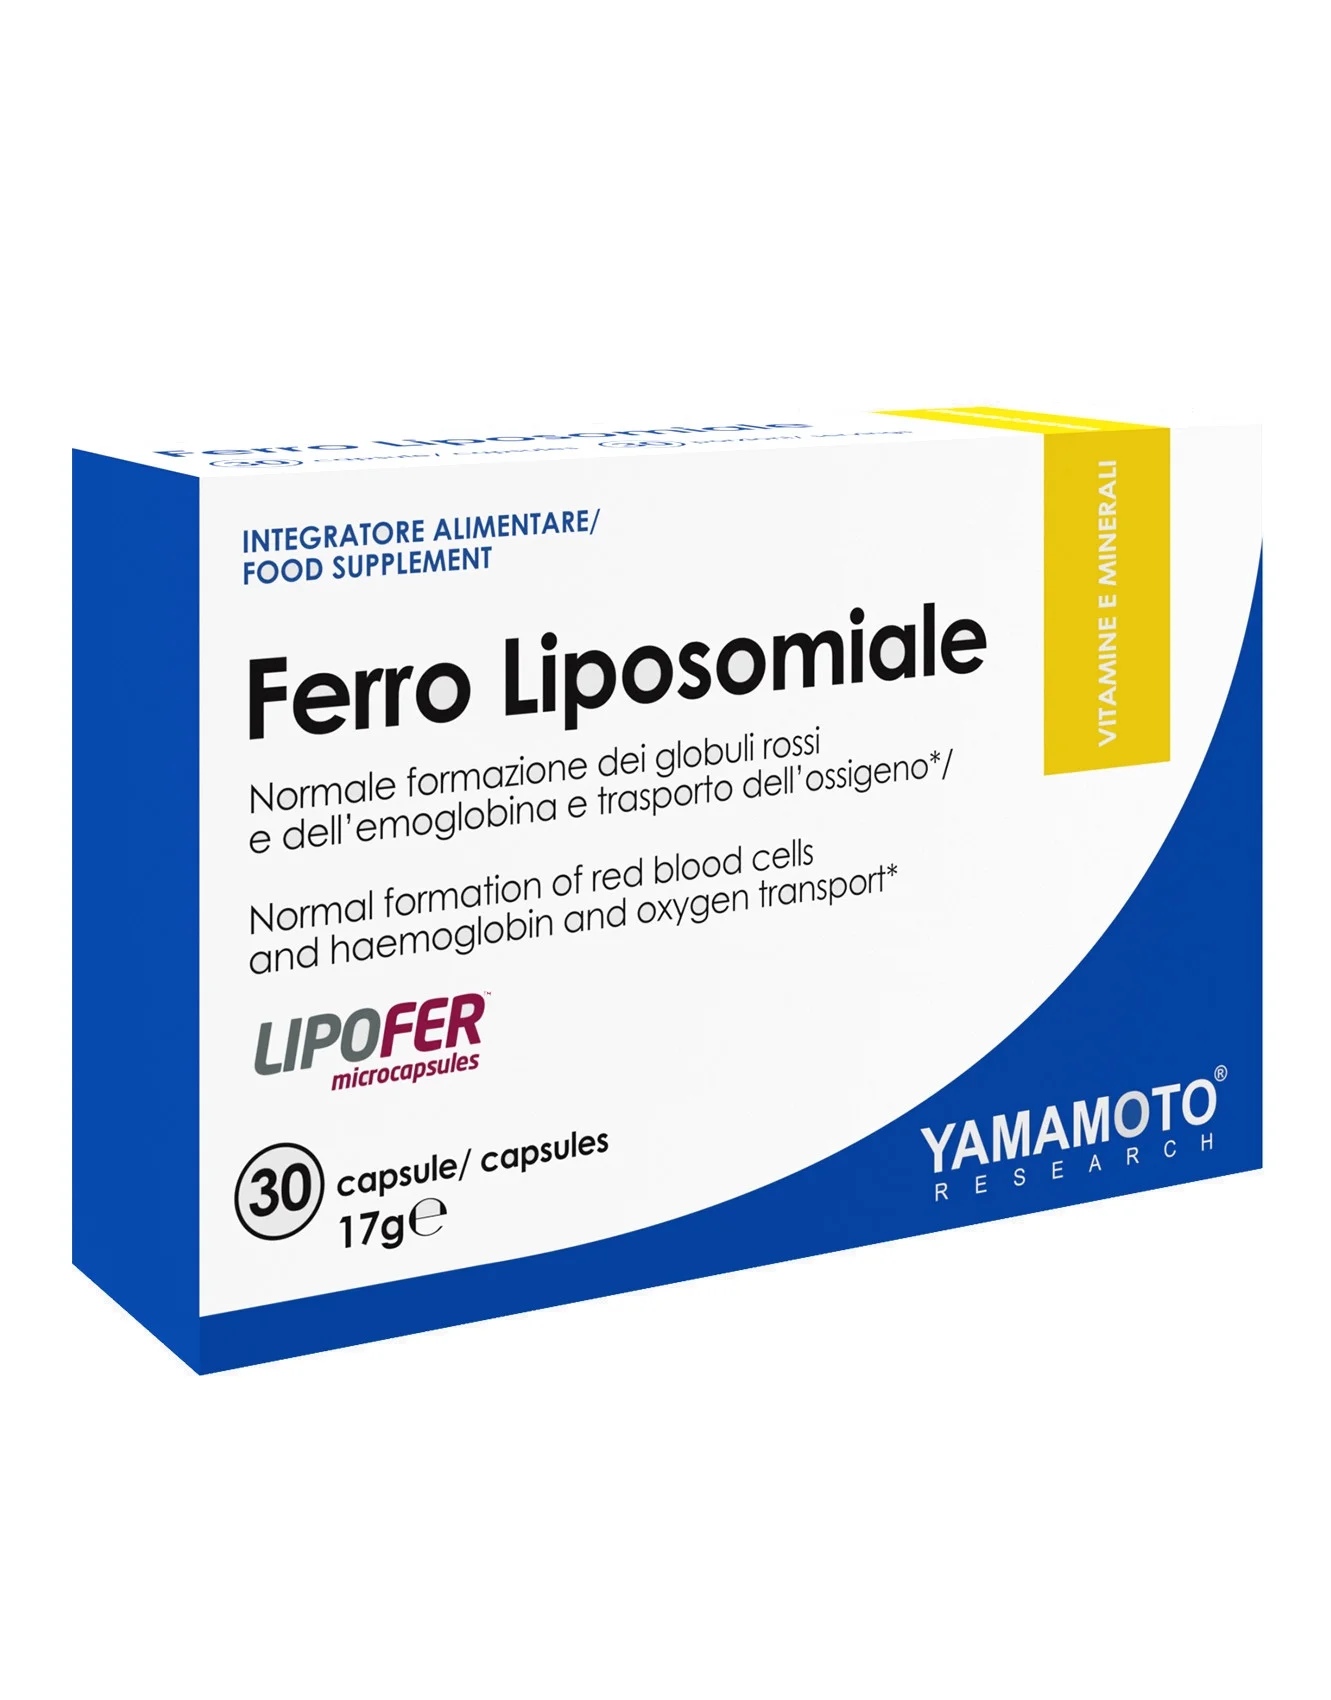 Yamamoto Natural Series Ferro Liposomiale 30 capsules / 15 g / 30 doses